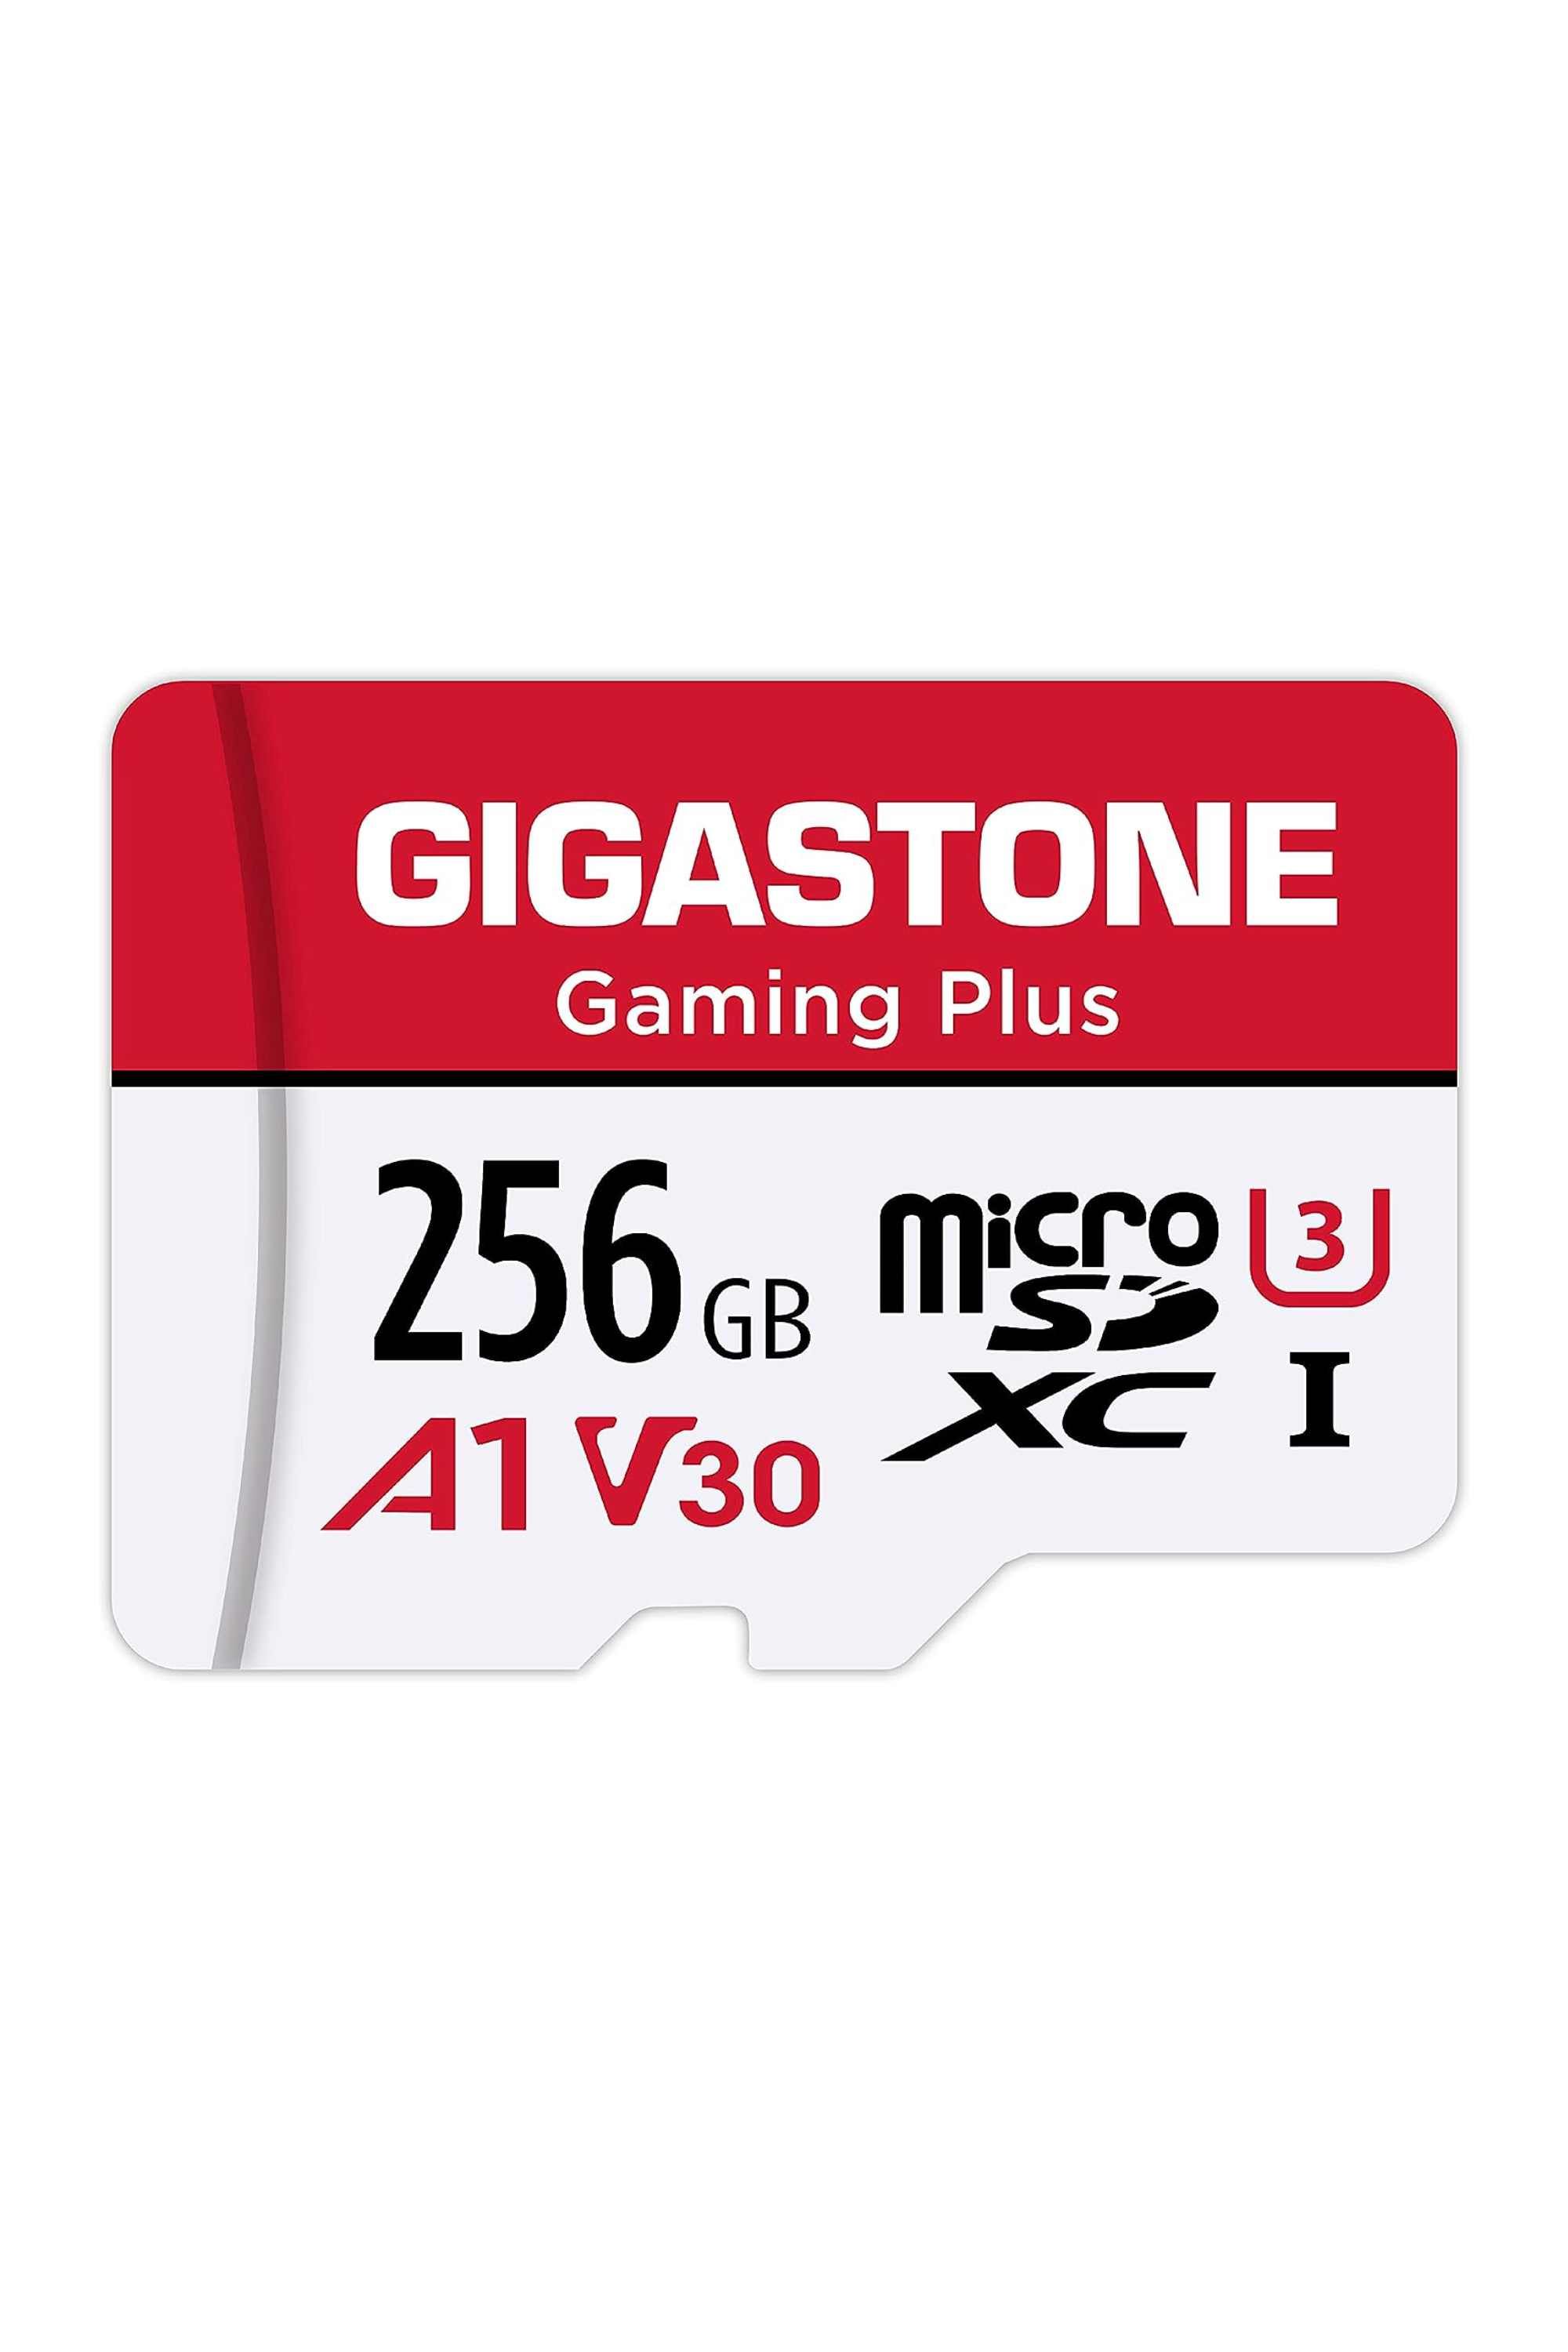 Gigastone 256GB Micro SD Card